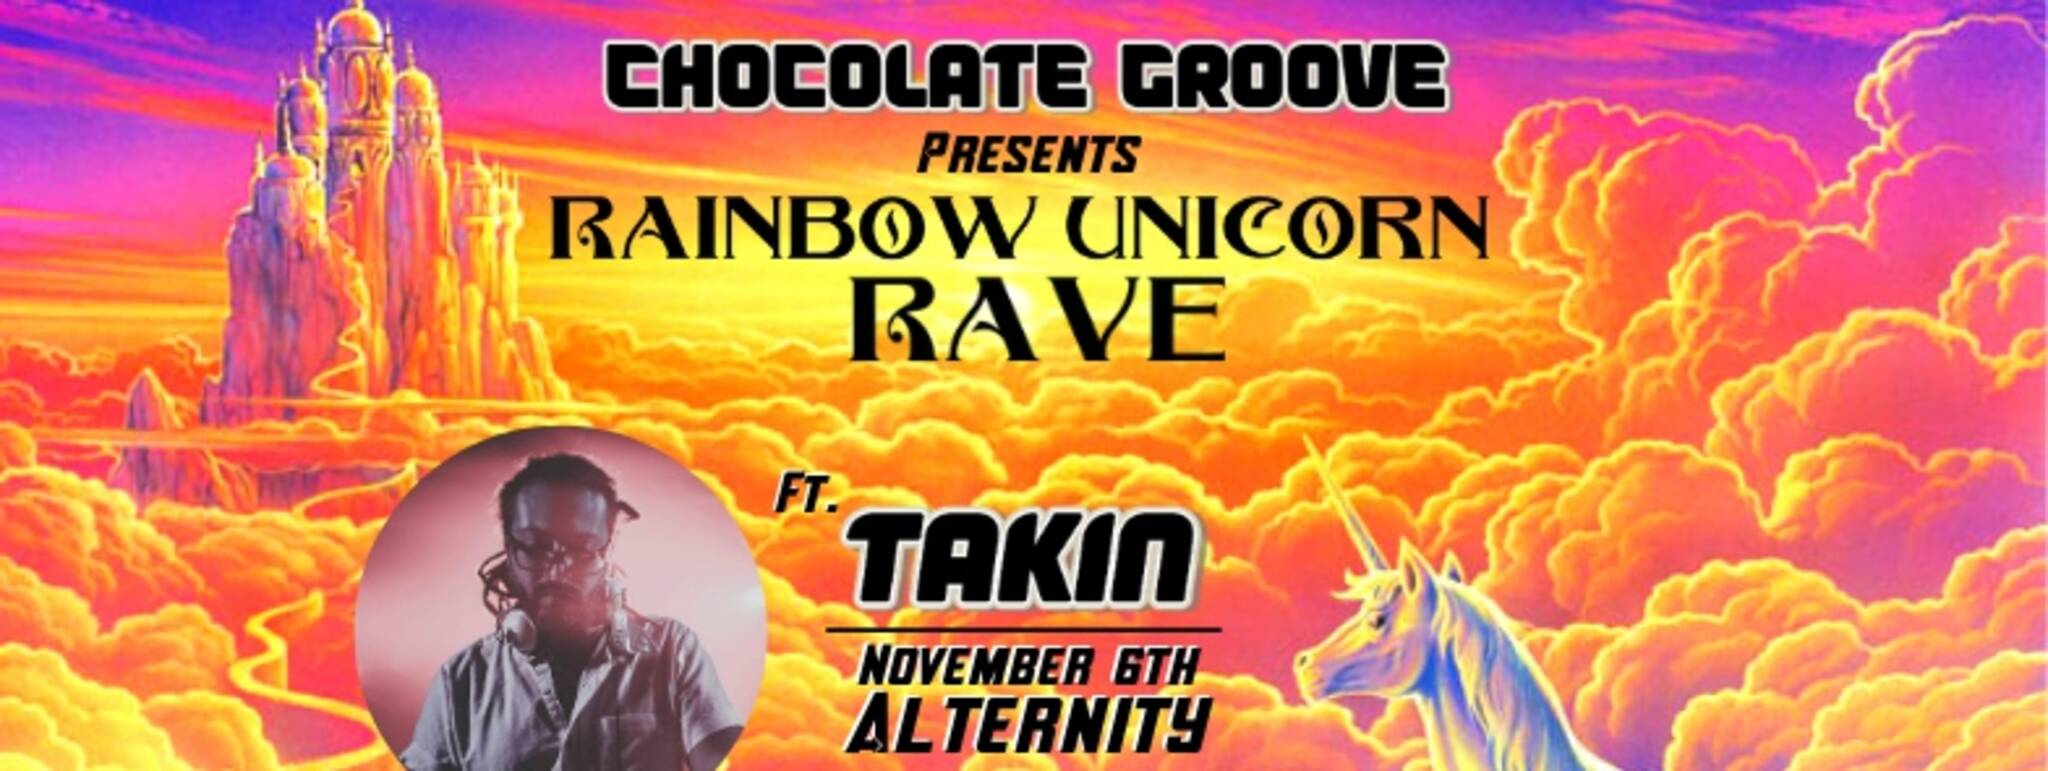 Chocolate Groove Rainbow Unicorn Rave 